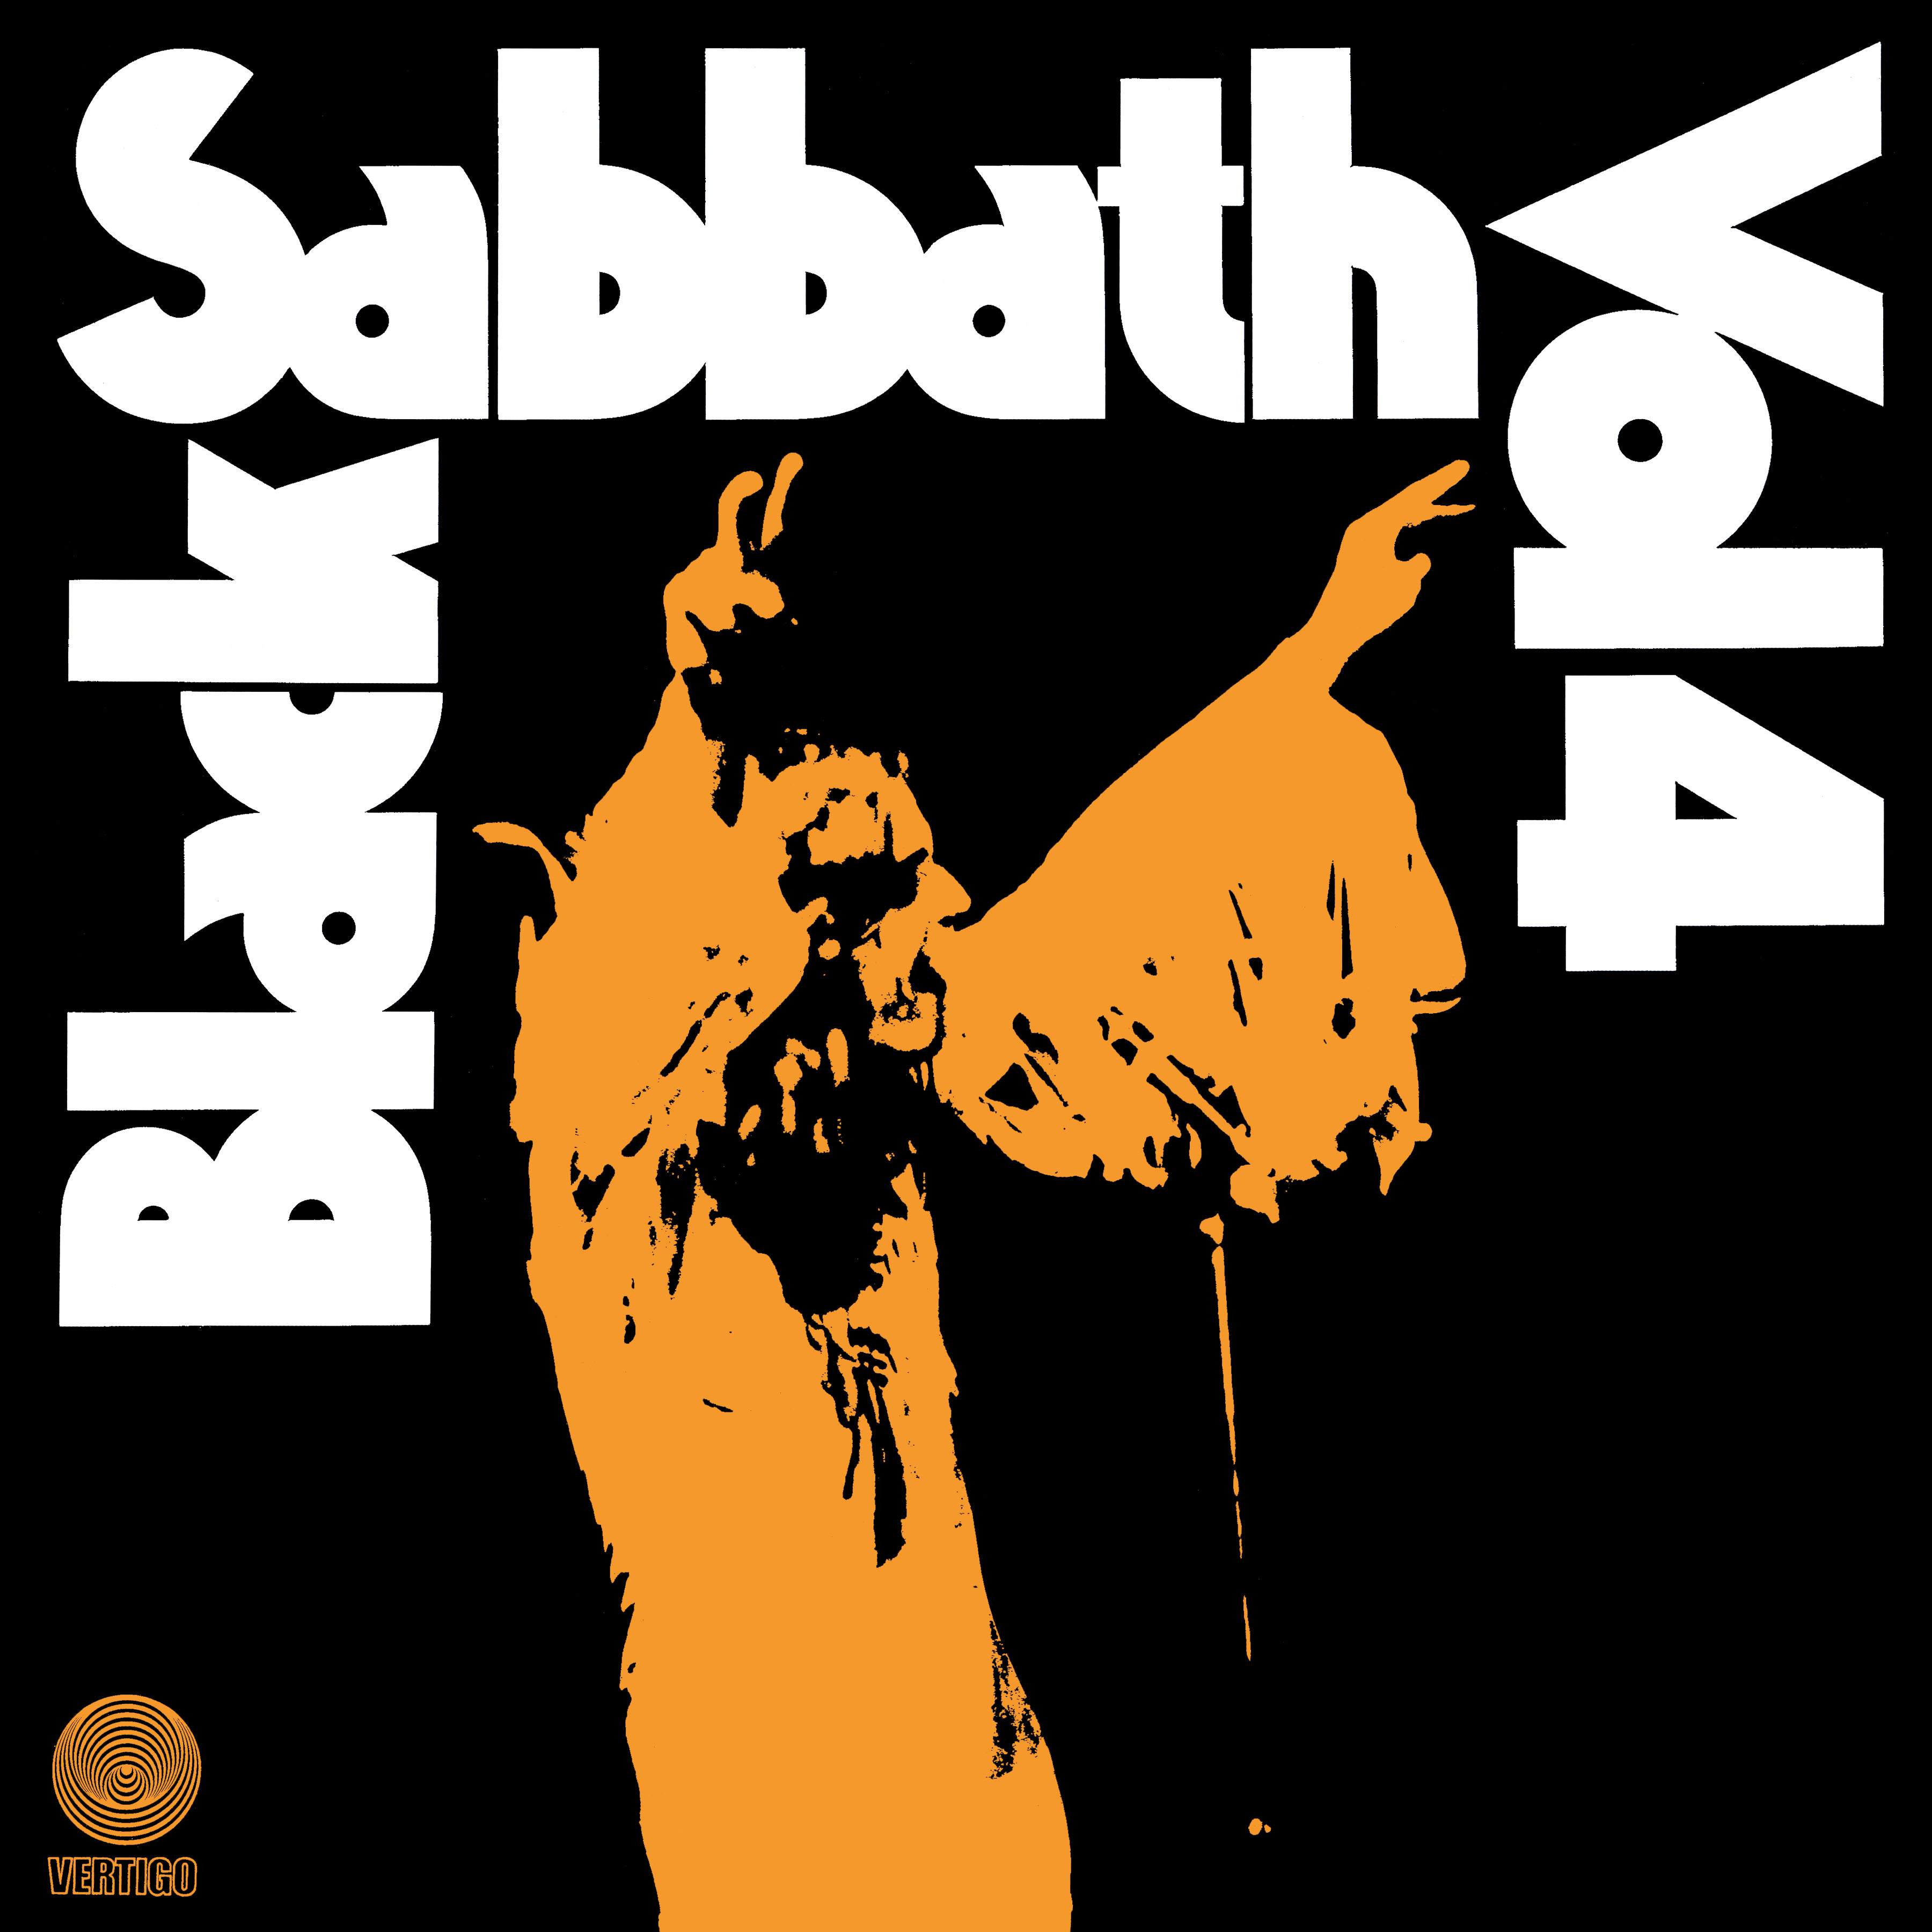 The Wizard (Black Sabbath song) - Wikipedia